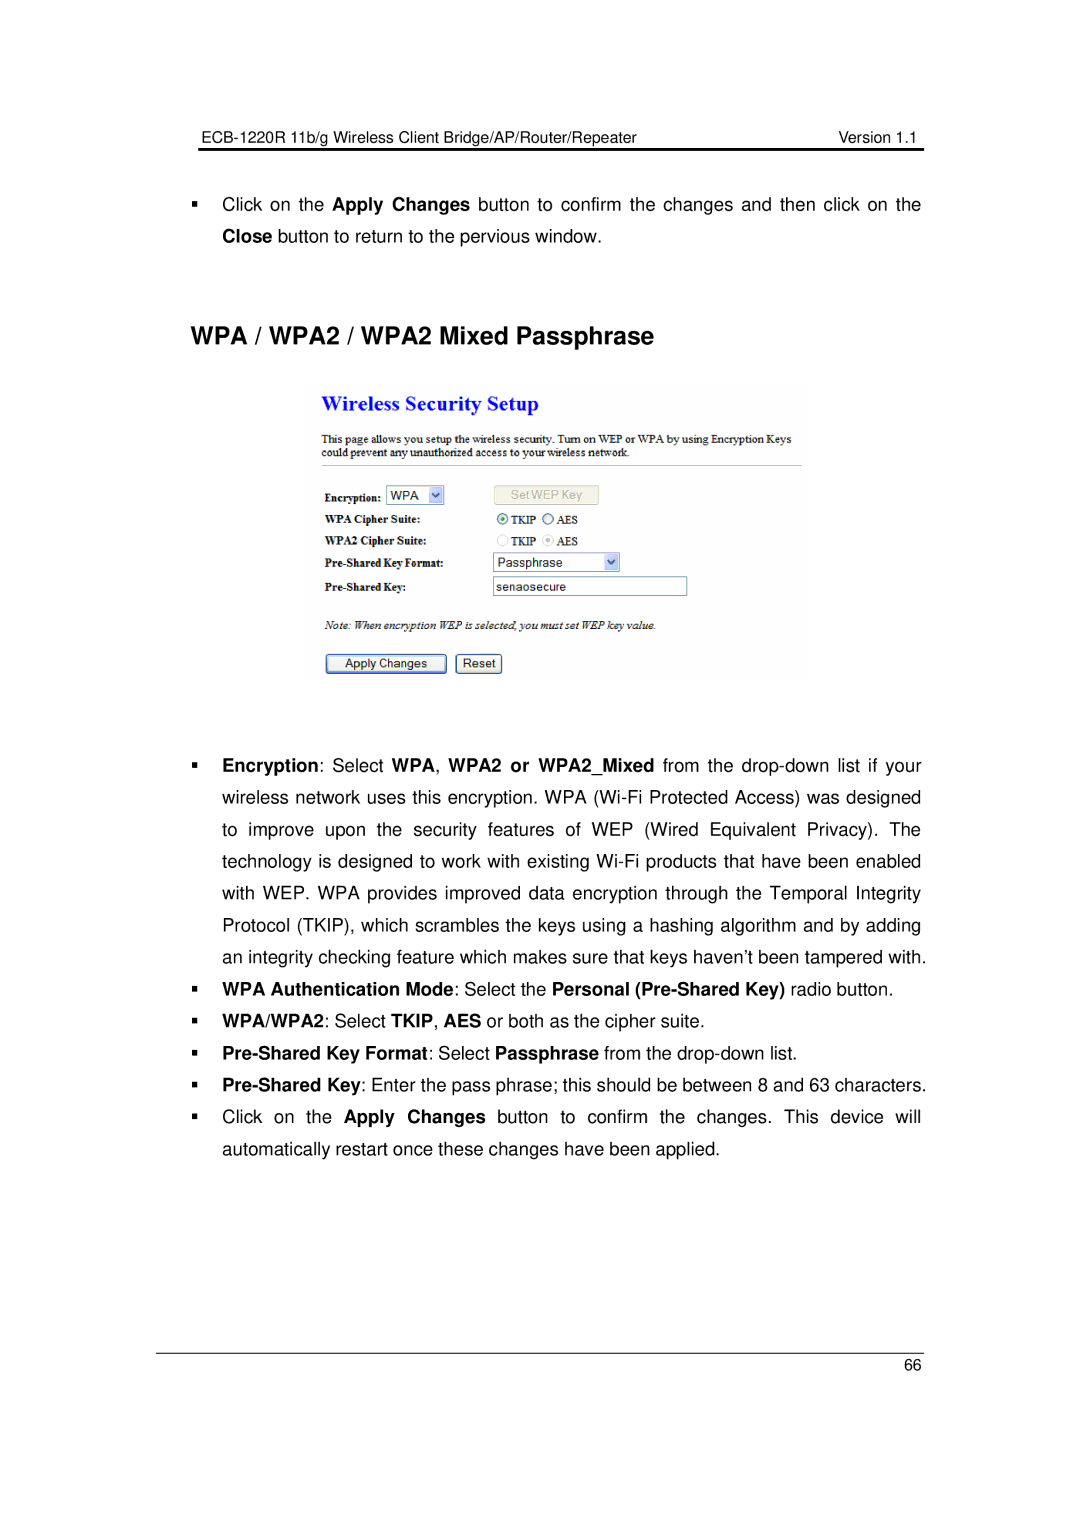 EnGenius Technologies ECB-1220R user manual WPA / WPA2 / WPA2 Mixed Passphrase 